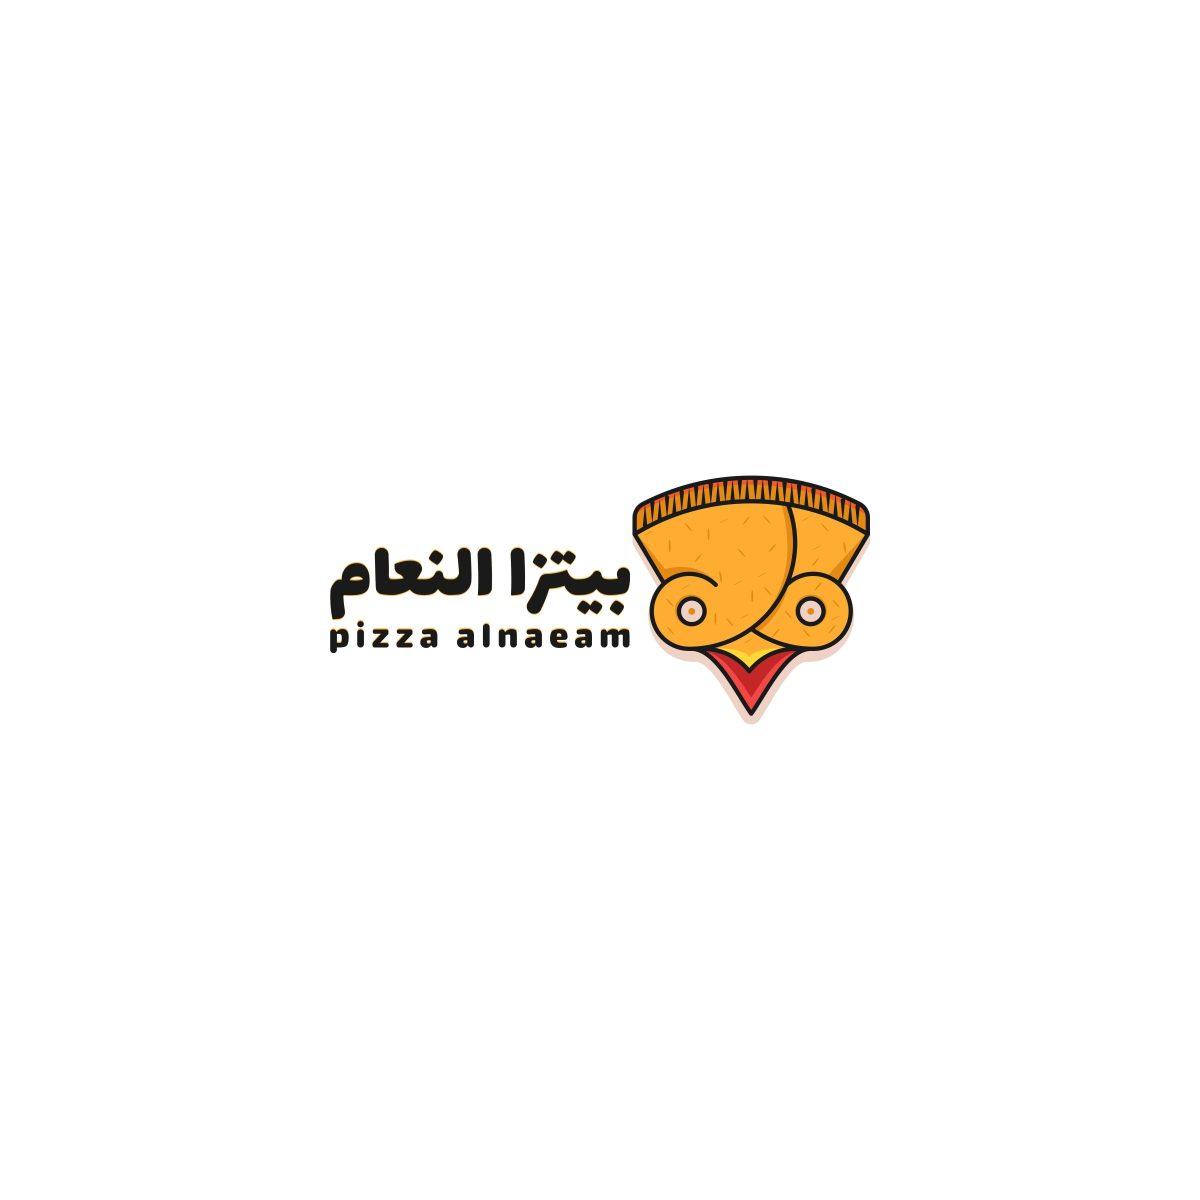 طراحی لوگو بیتزا النعام